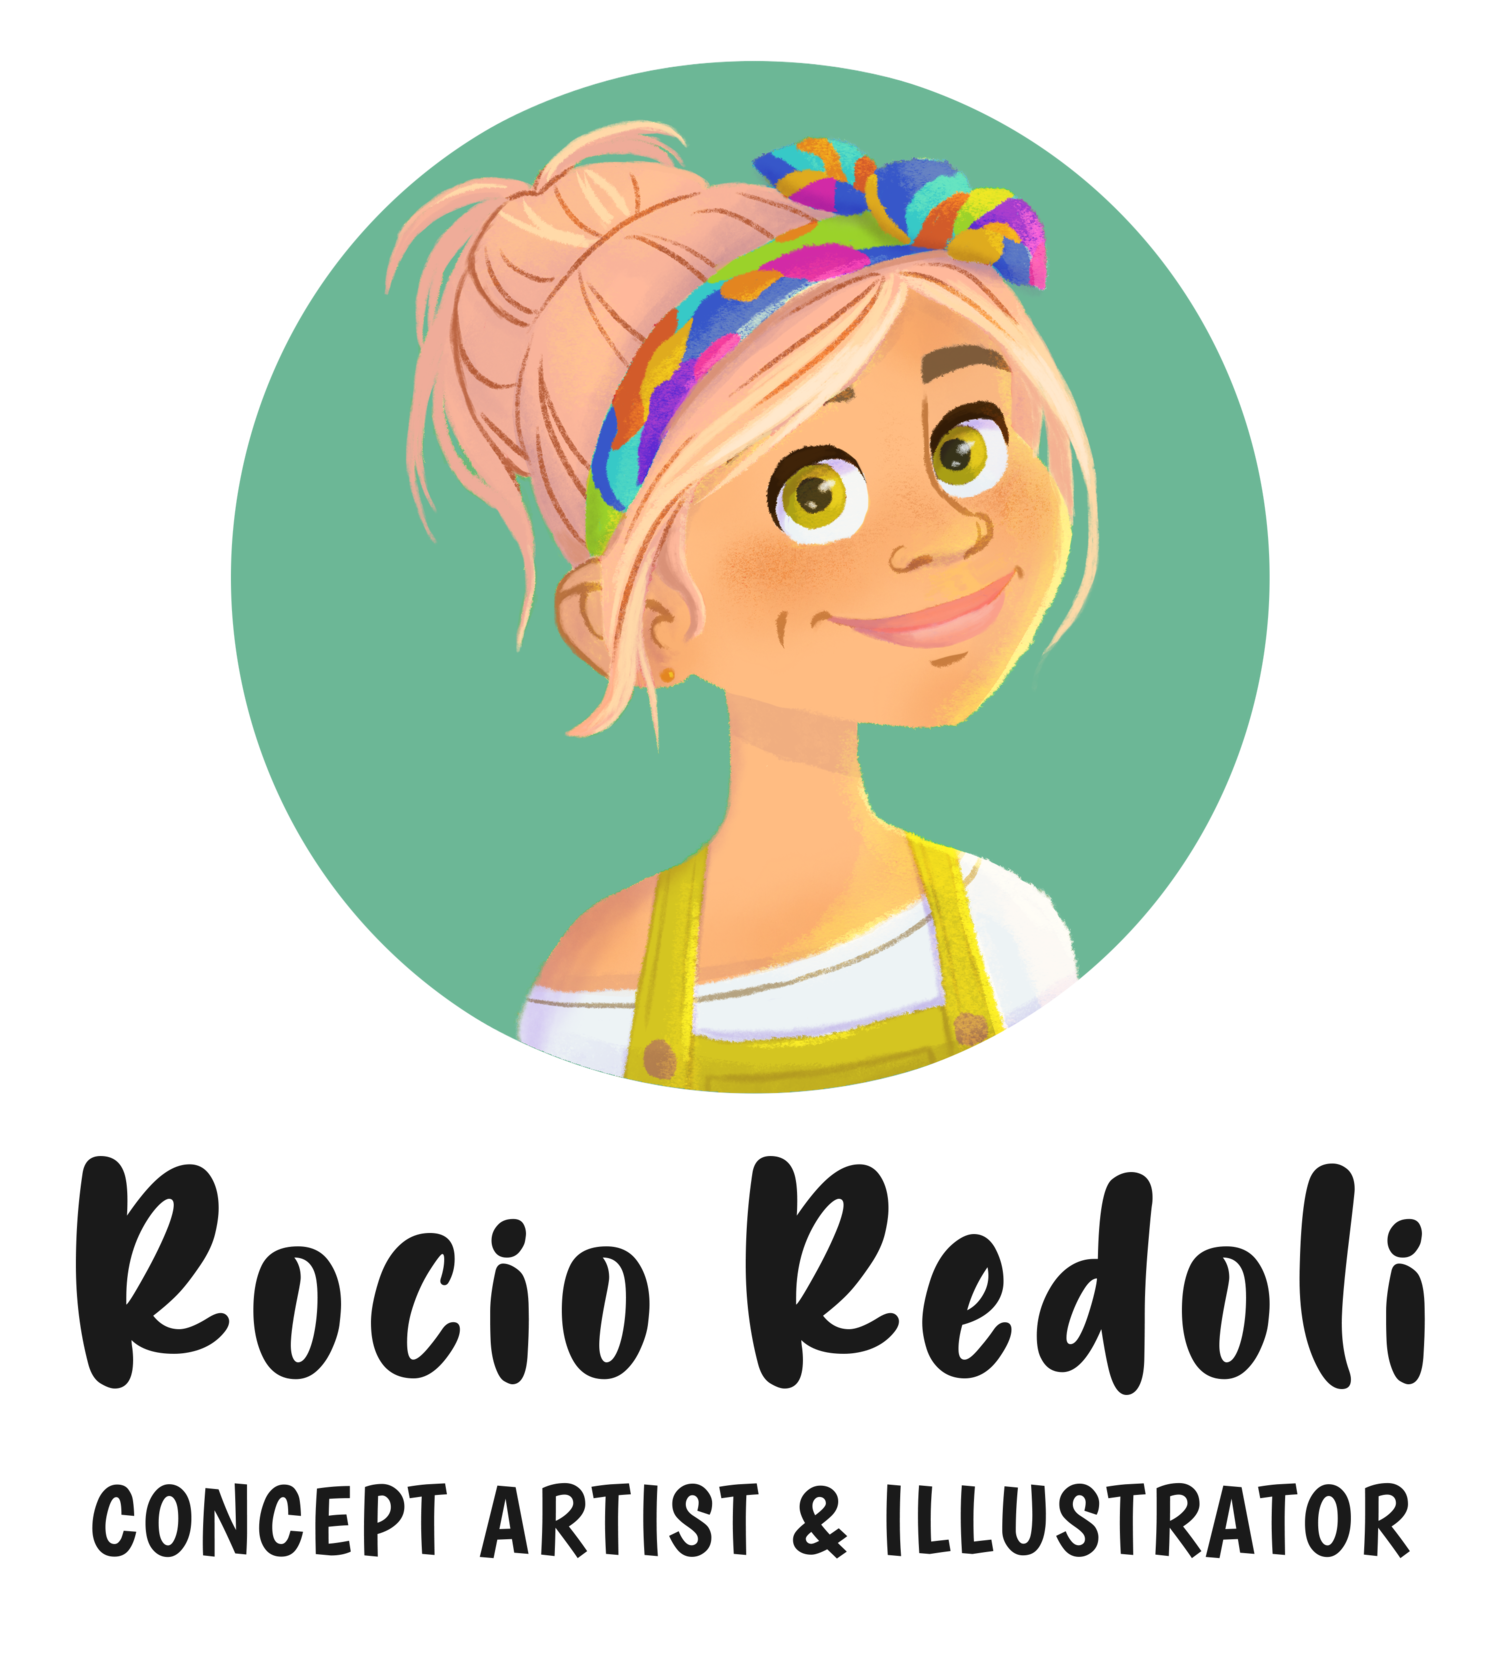 Rocio Redoli - Concept Artist & Illustrator